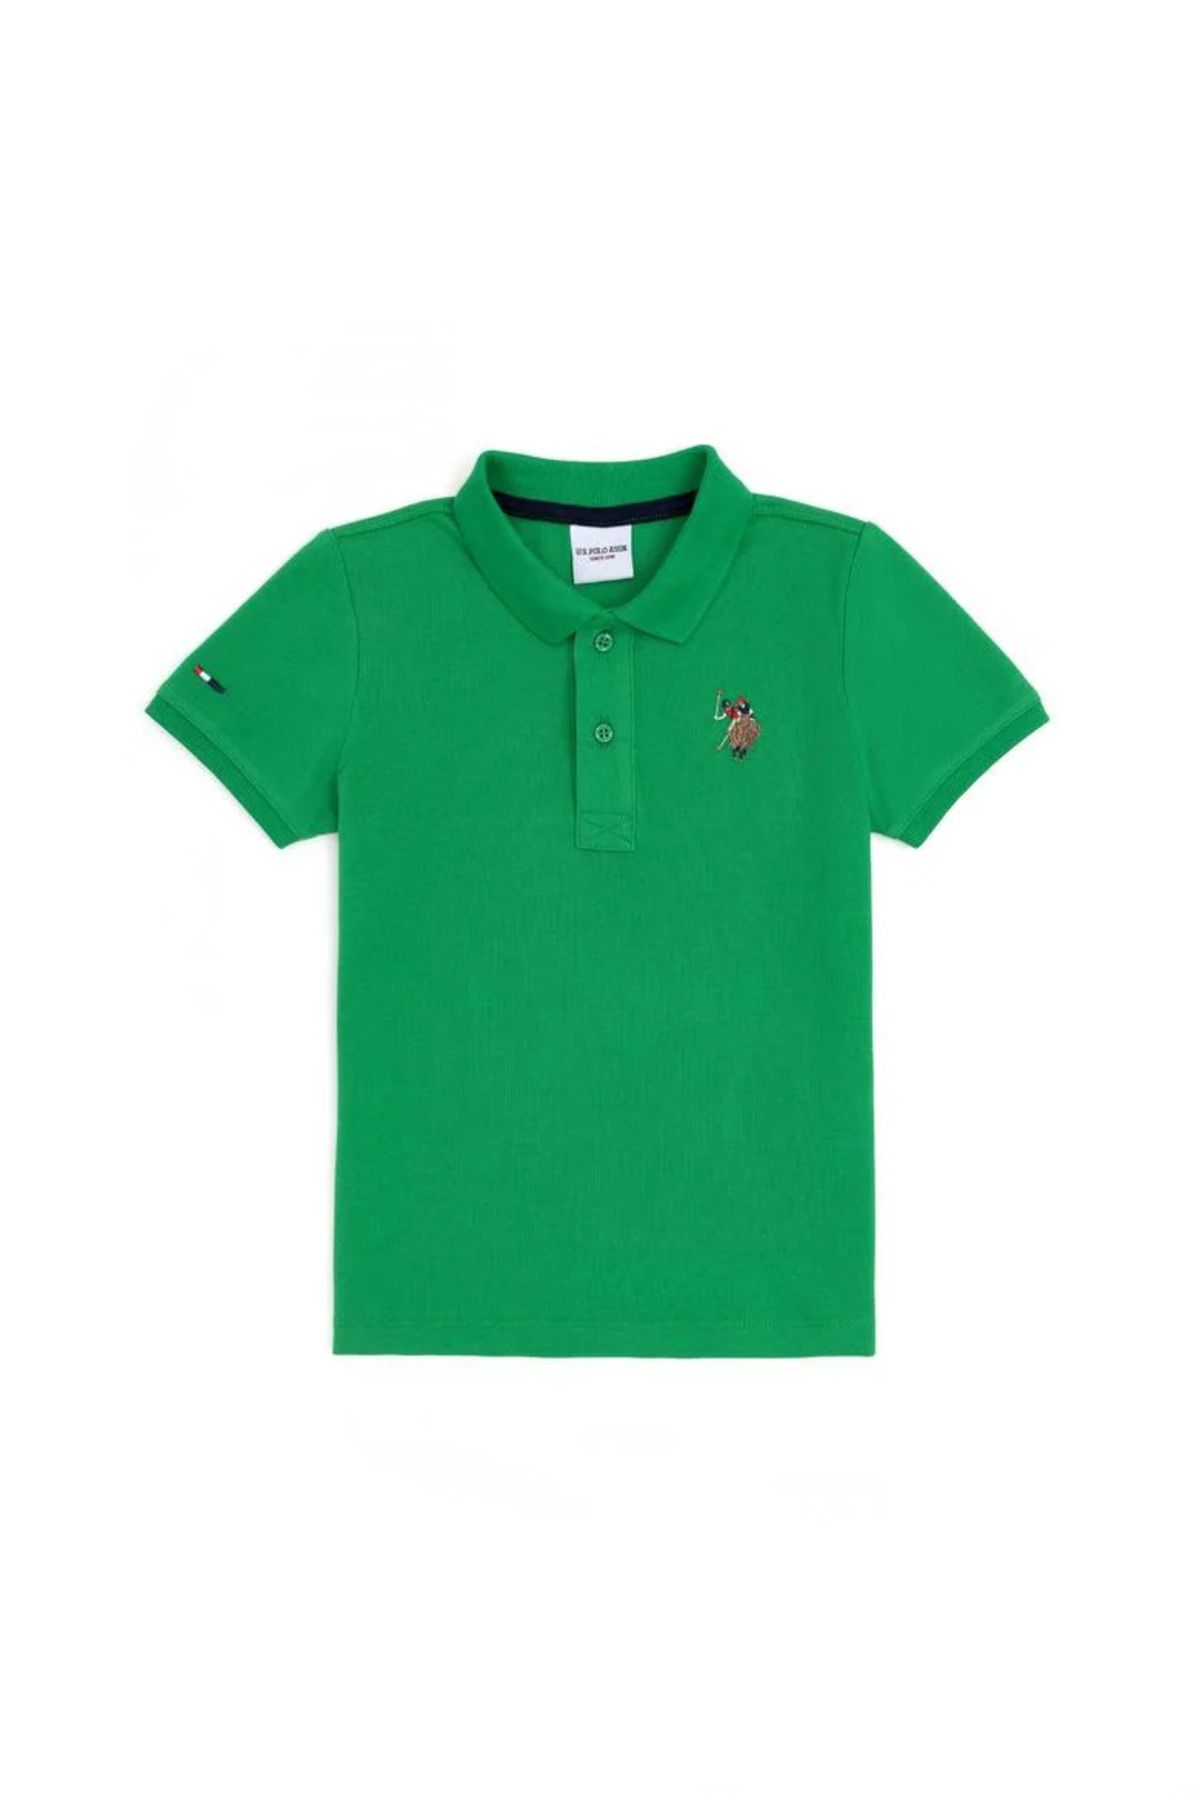 U.S. Polo Assn. Erkek Çocuk Yeşil T-Shirt